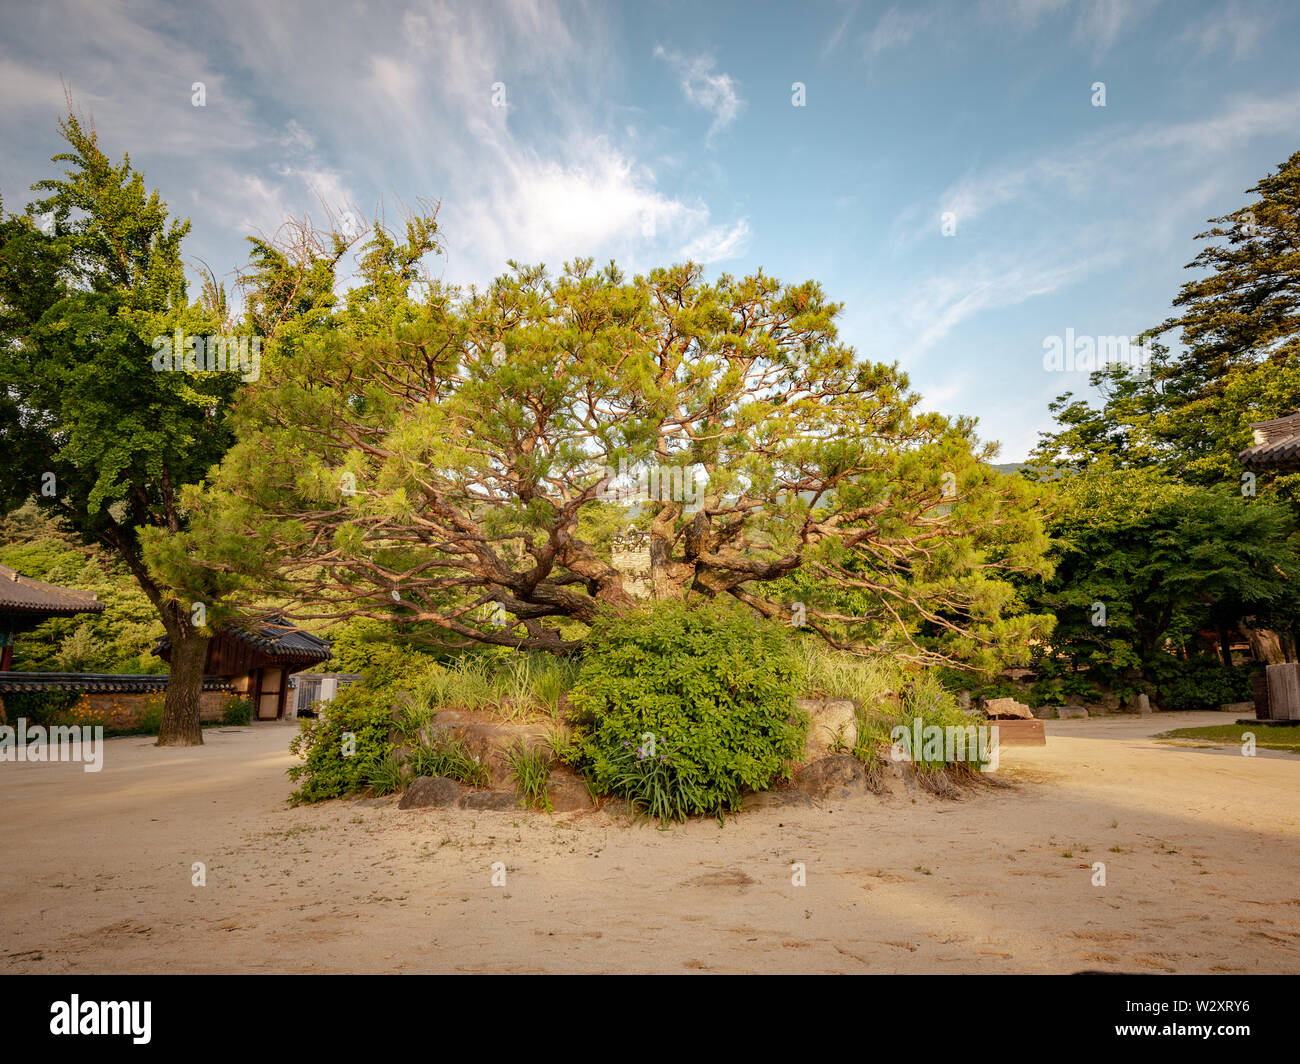 Pine tree at Jijiksa Monastery, taken early morning, Gimcheon, South Korea Stock Photo